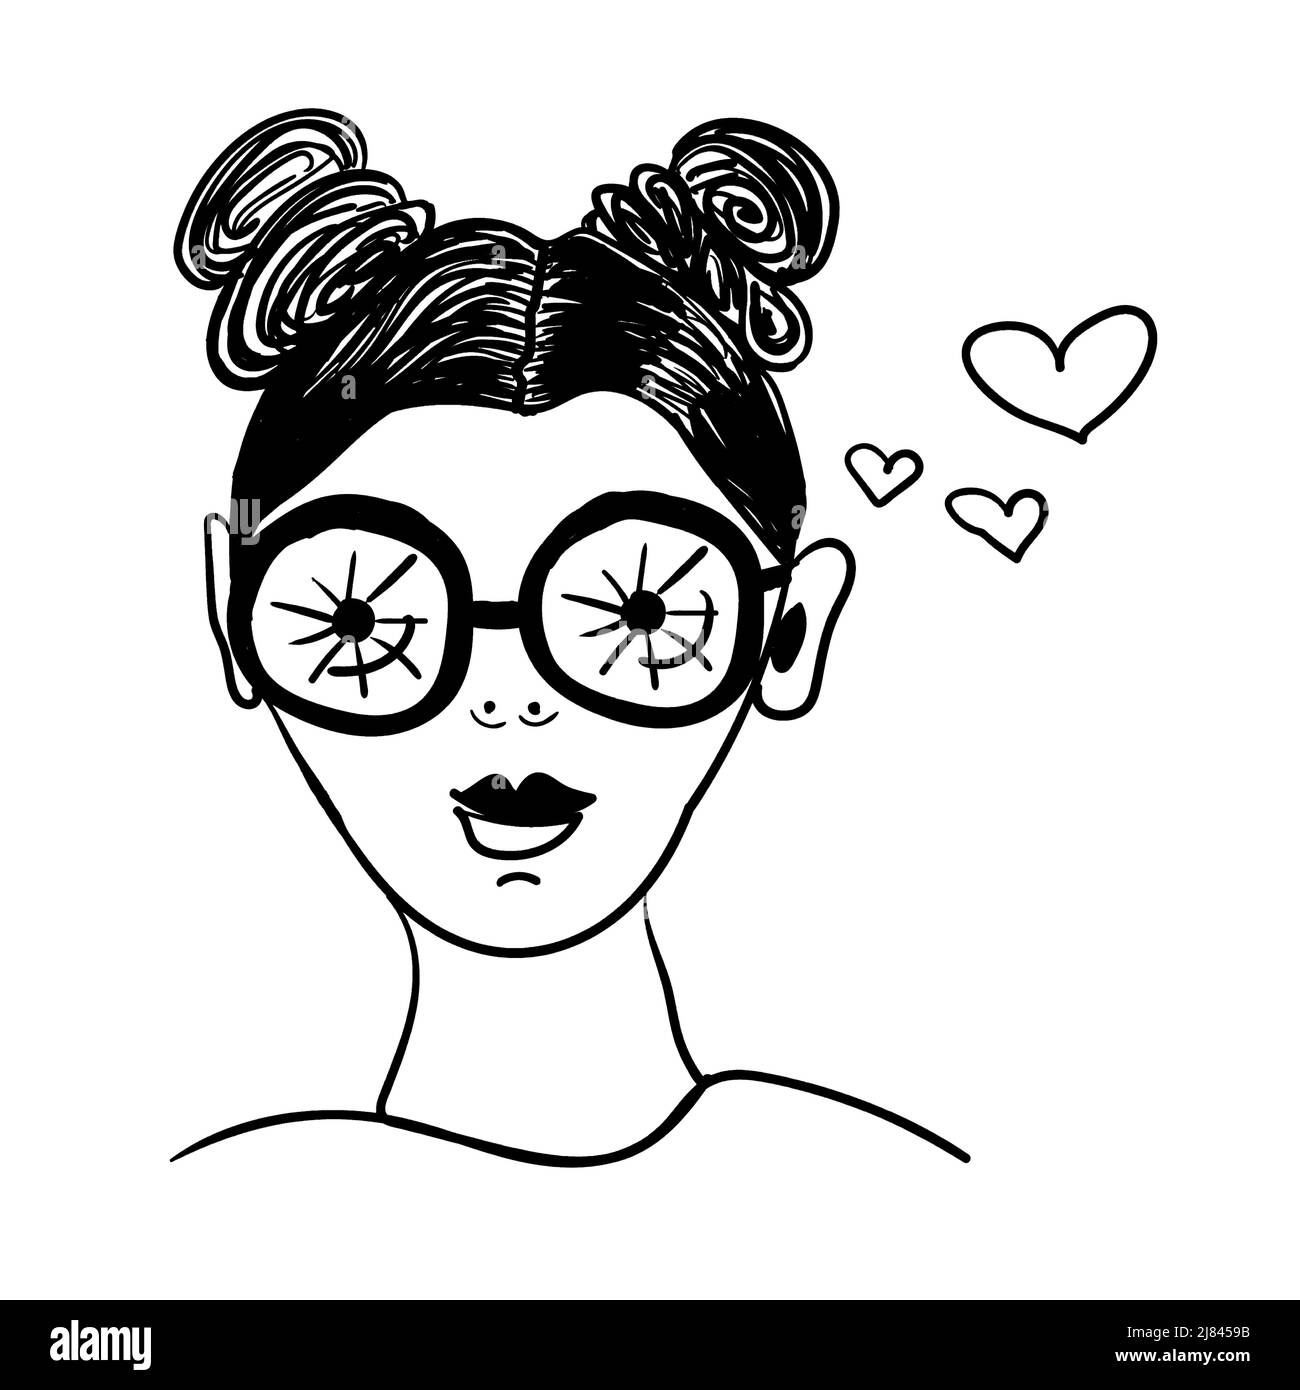 Girl in sunglasses, black and white illustration Stock Vector